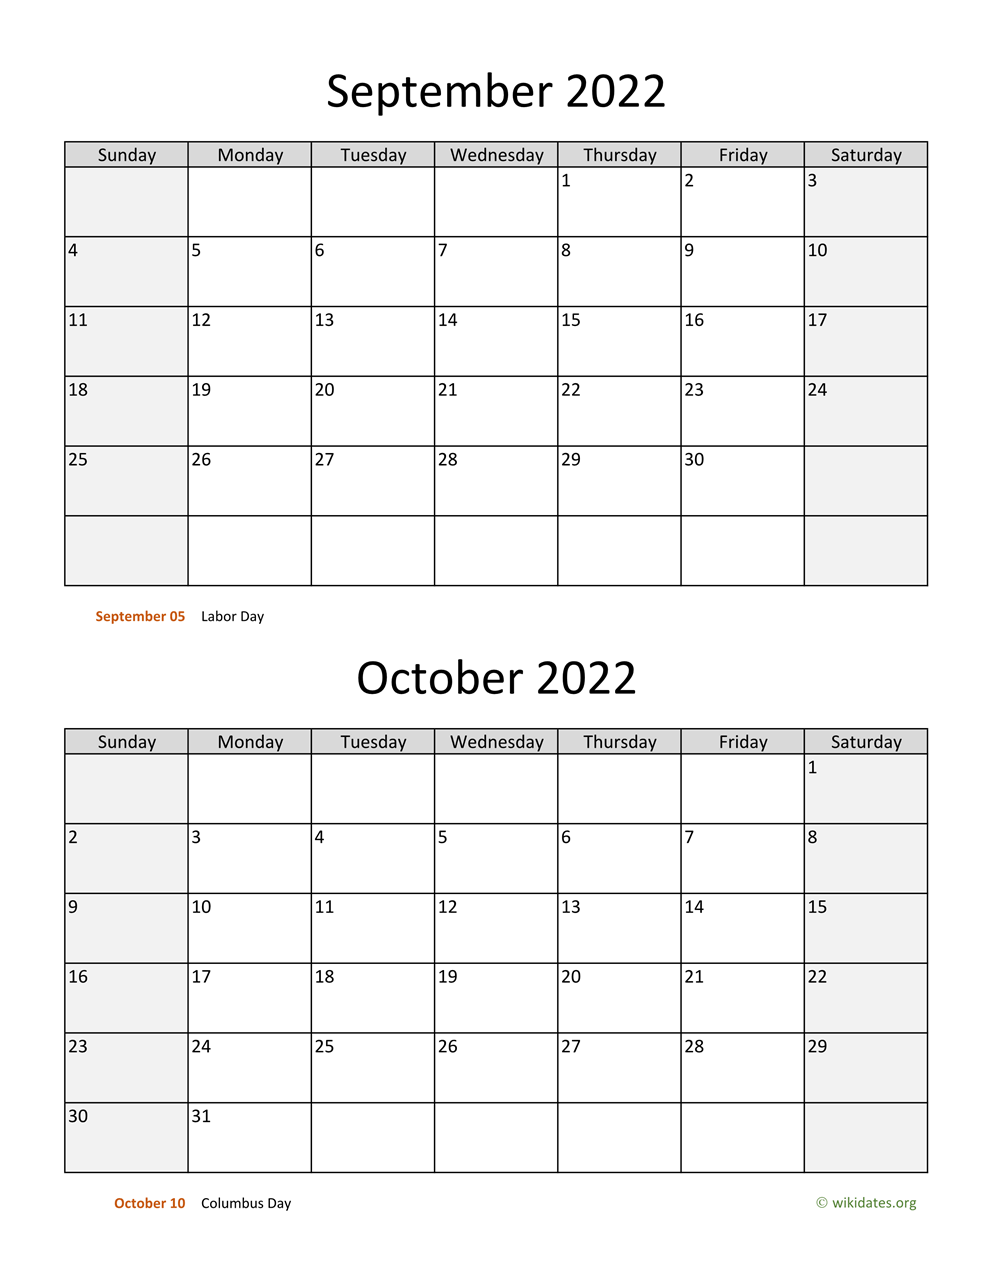 October 2022 Calendar September And October 2022 Calendar | Wikidates.org